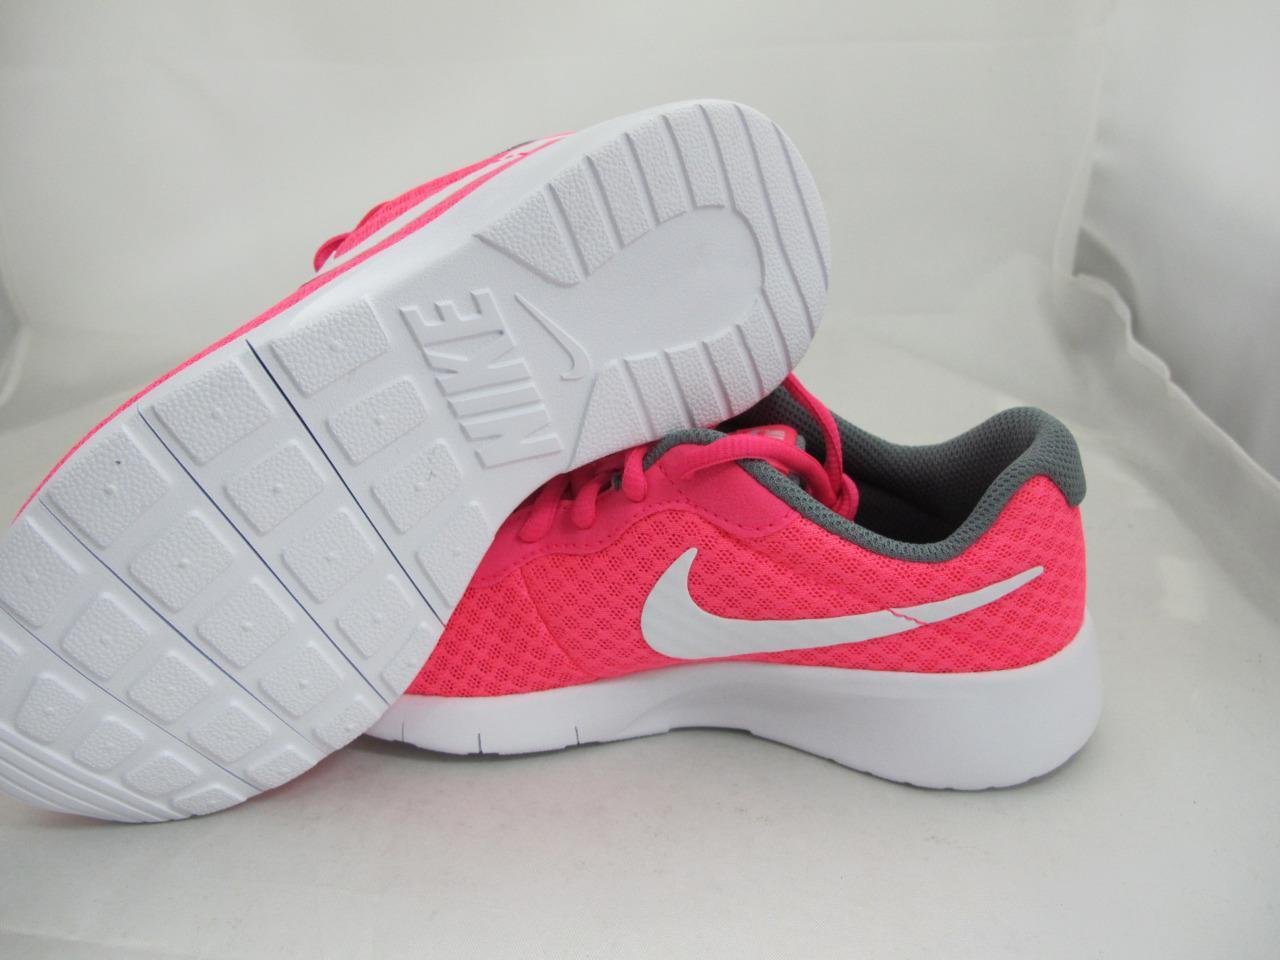 Brand new Nike Tanjuns (Size 6Y / 8 in Women)